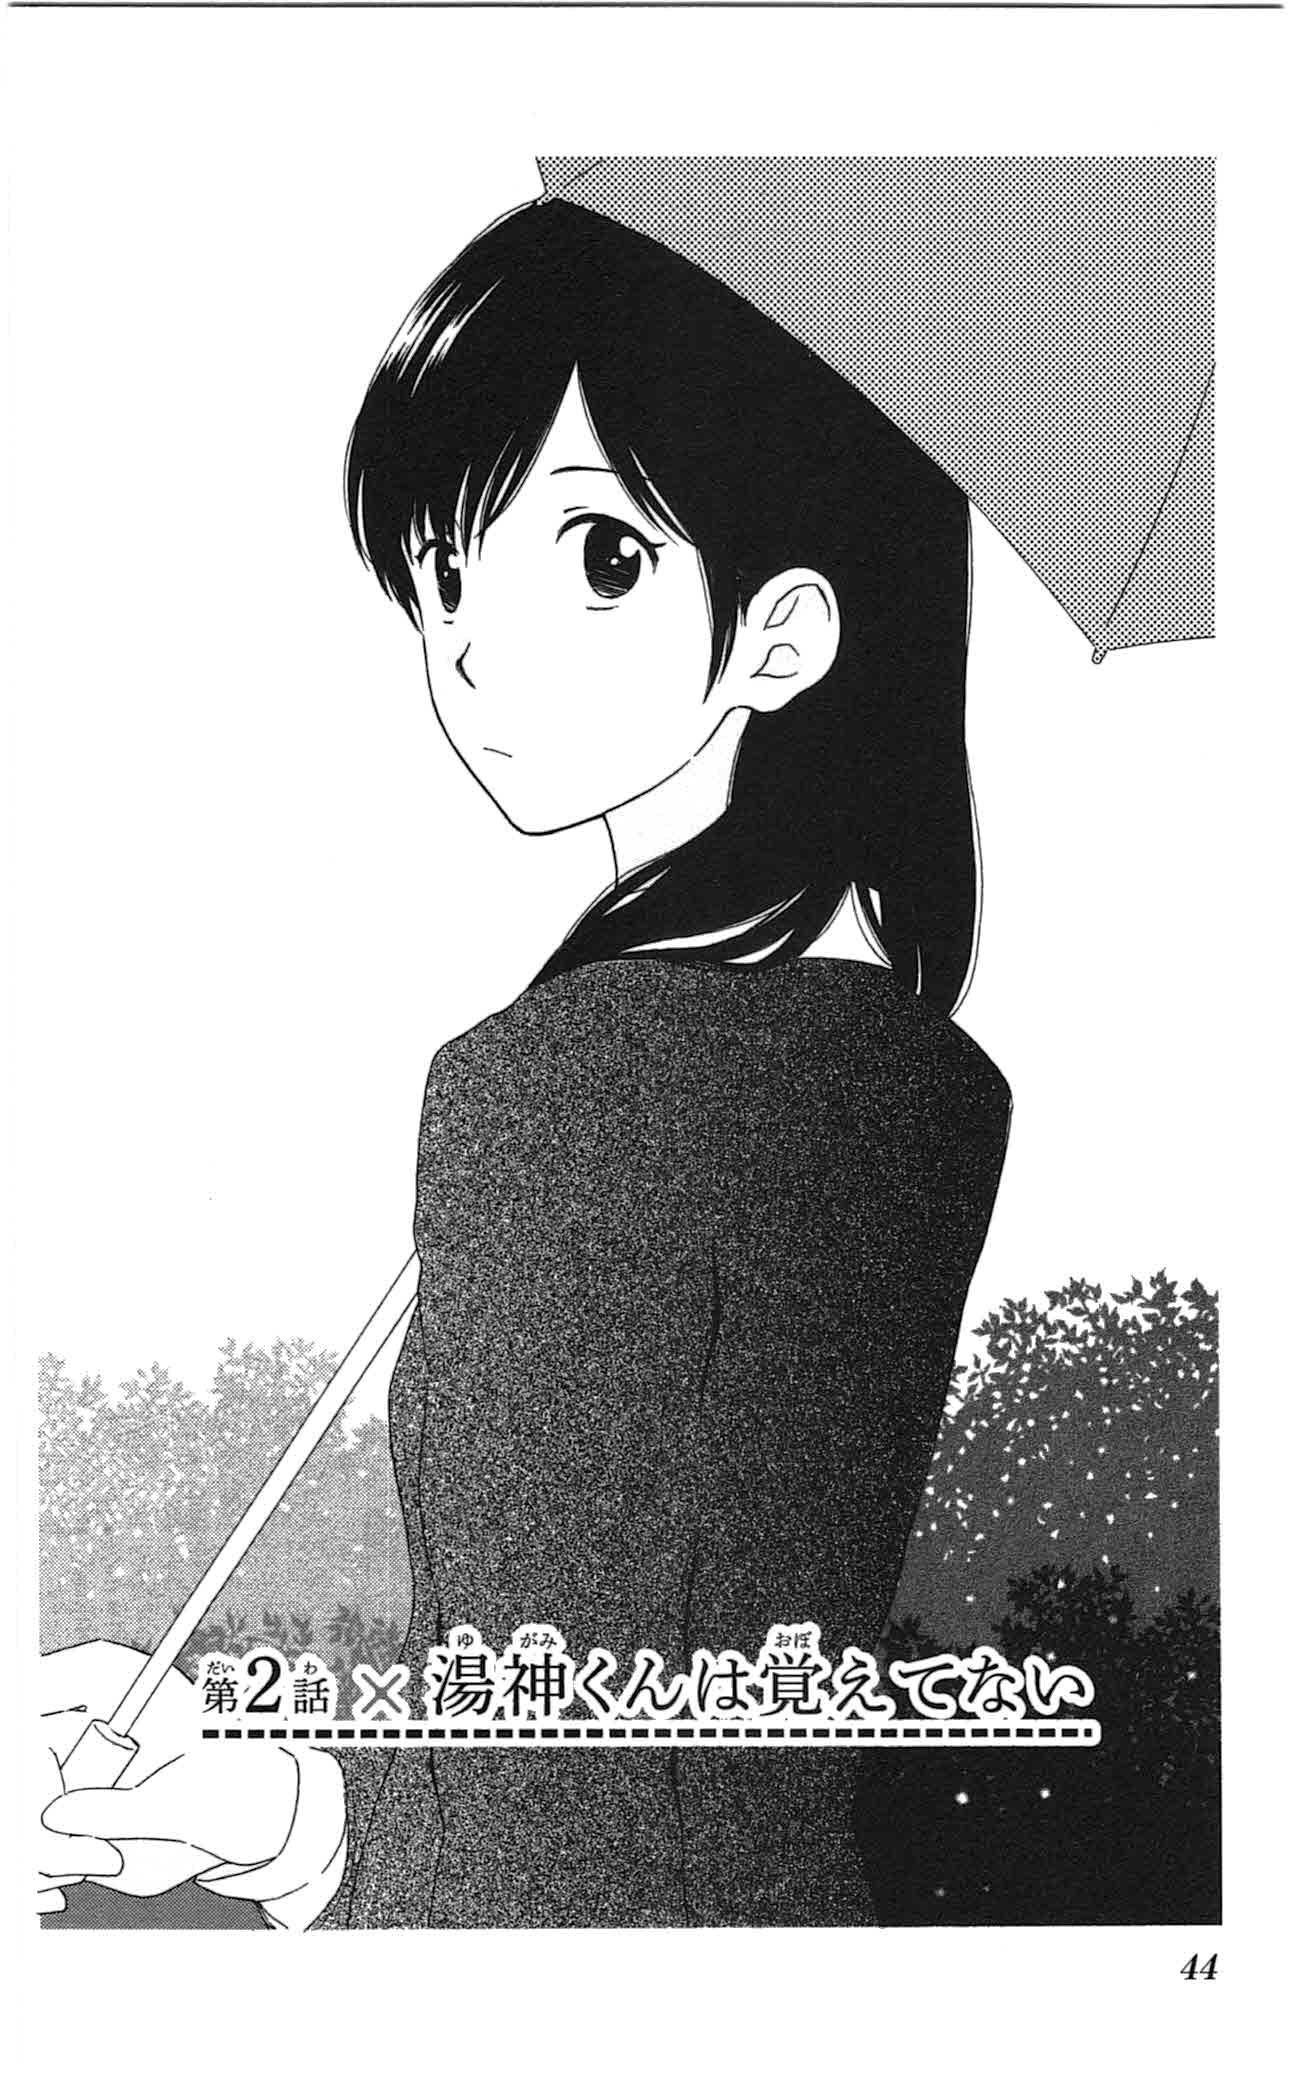 Yugami-kun ni wa Tomodachi ga Inai - Chapter 002 - Page 2